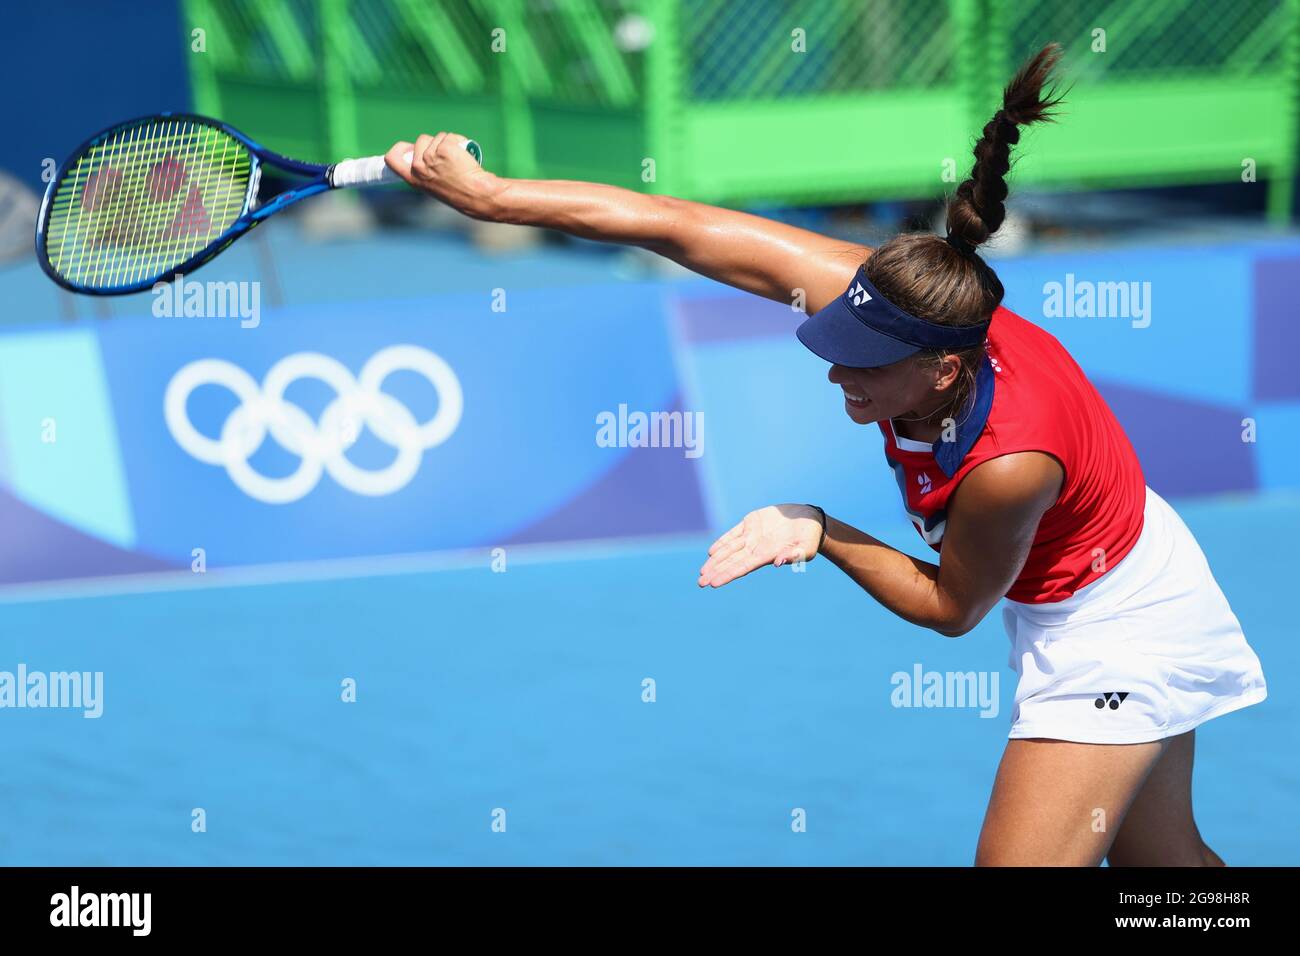 Tokyo 2020 Olympics - Tennis - Women's Singles - Round 1 - Ariake Tennis  Park - Tokyo, Japan - July 25, 2021. Ivana Jorovic of Serbia in action  during her first round